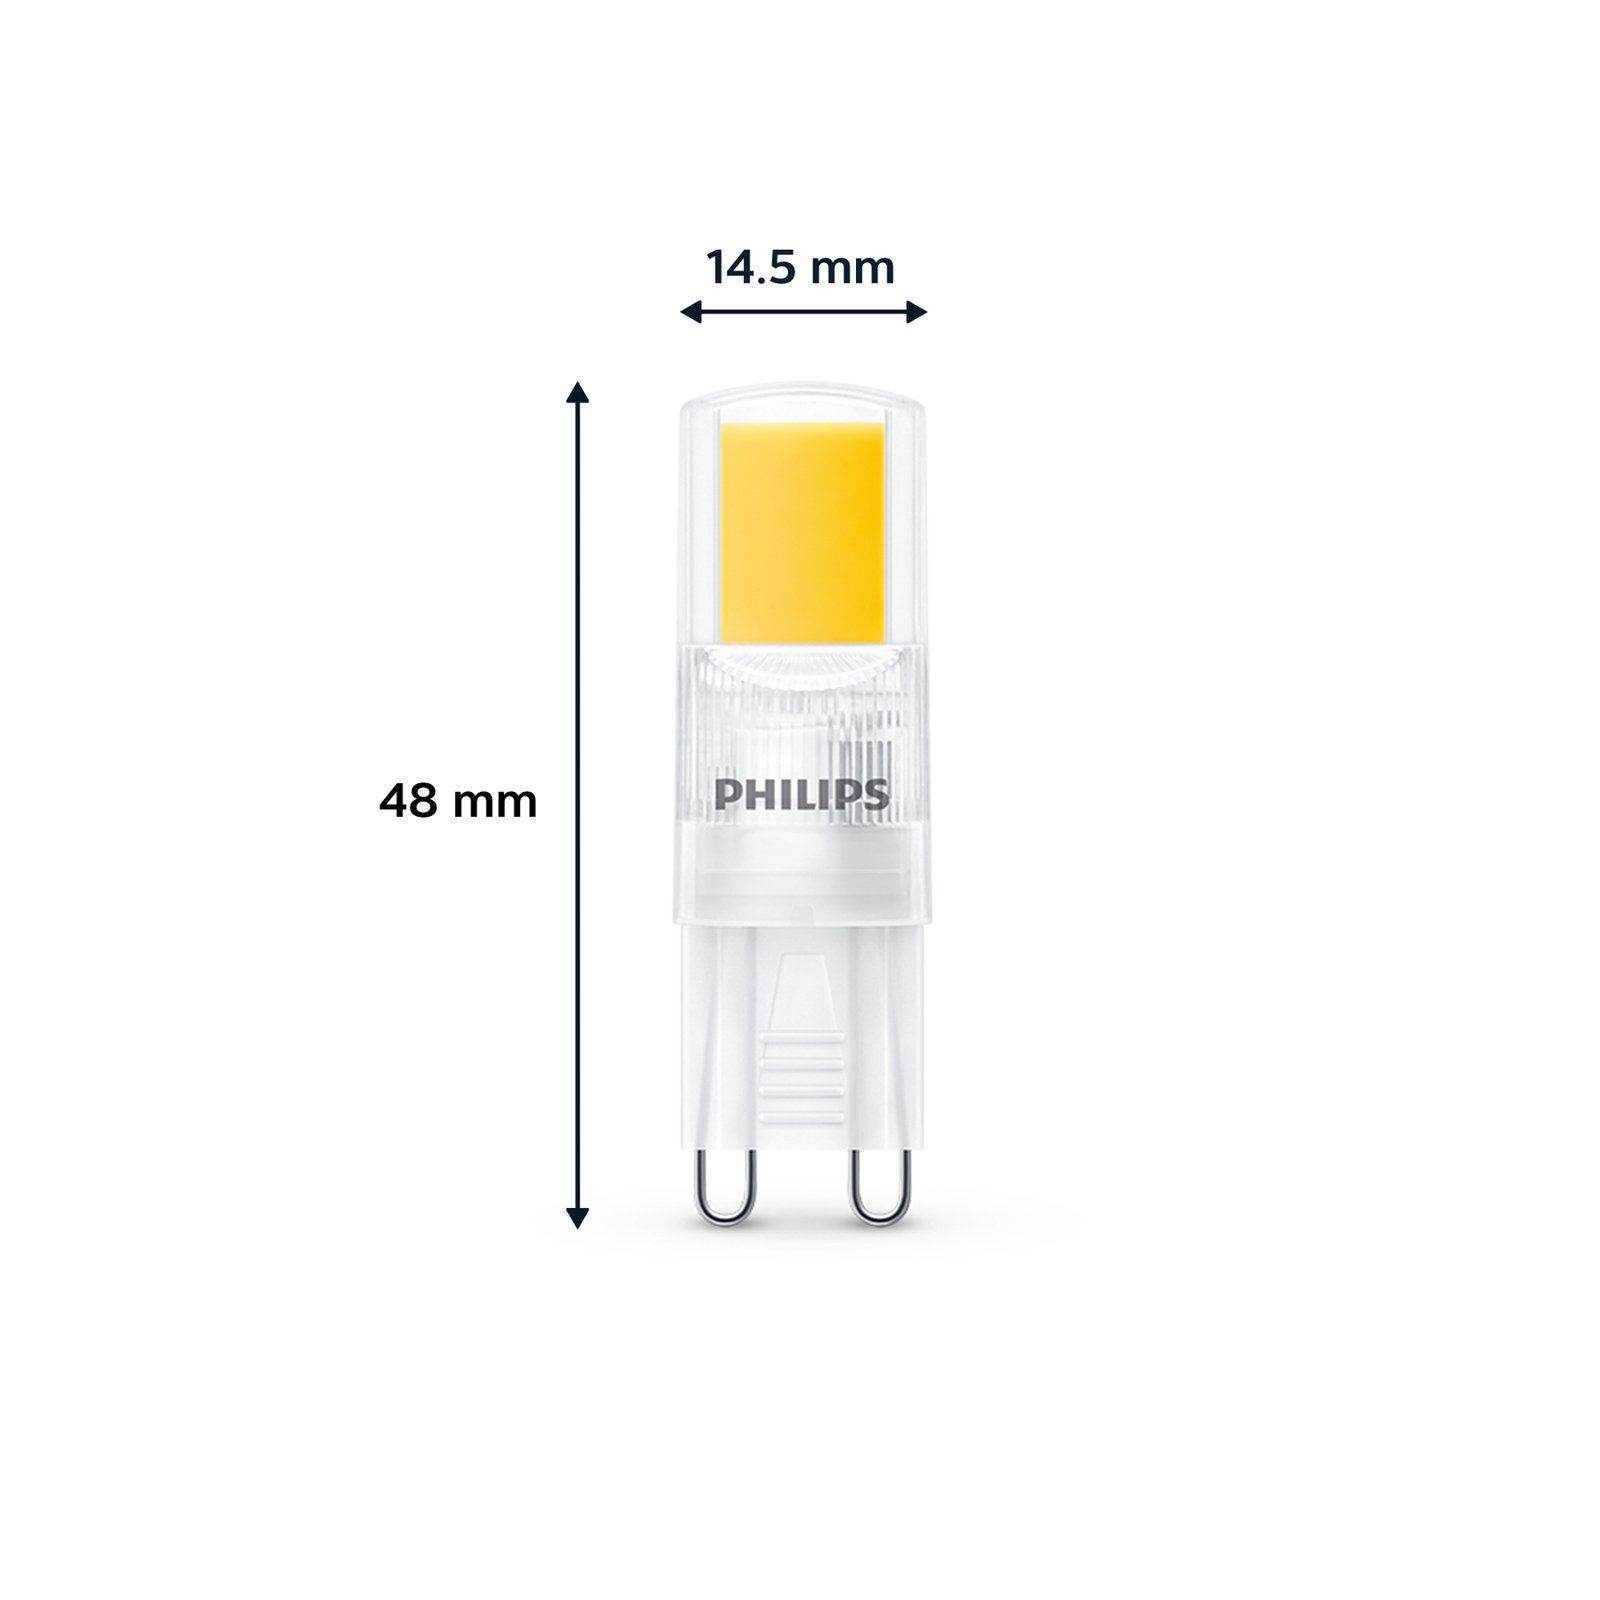 Philips LED bulb G9 2W 220lm 2700K clear x6